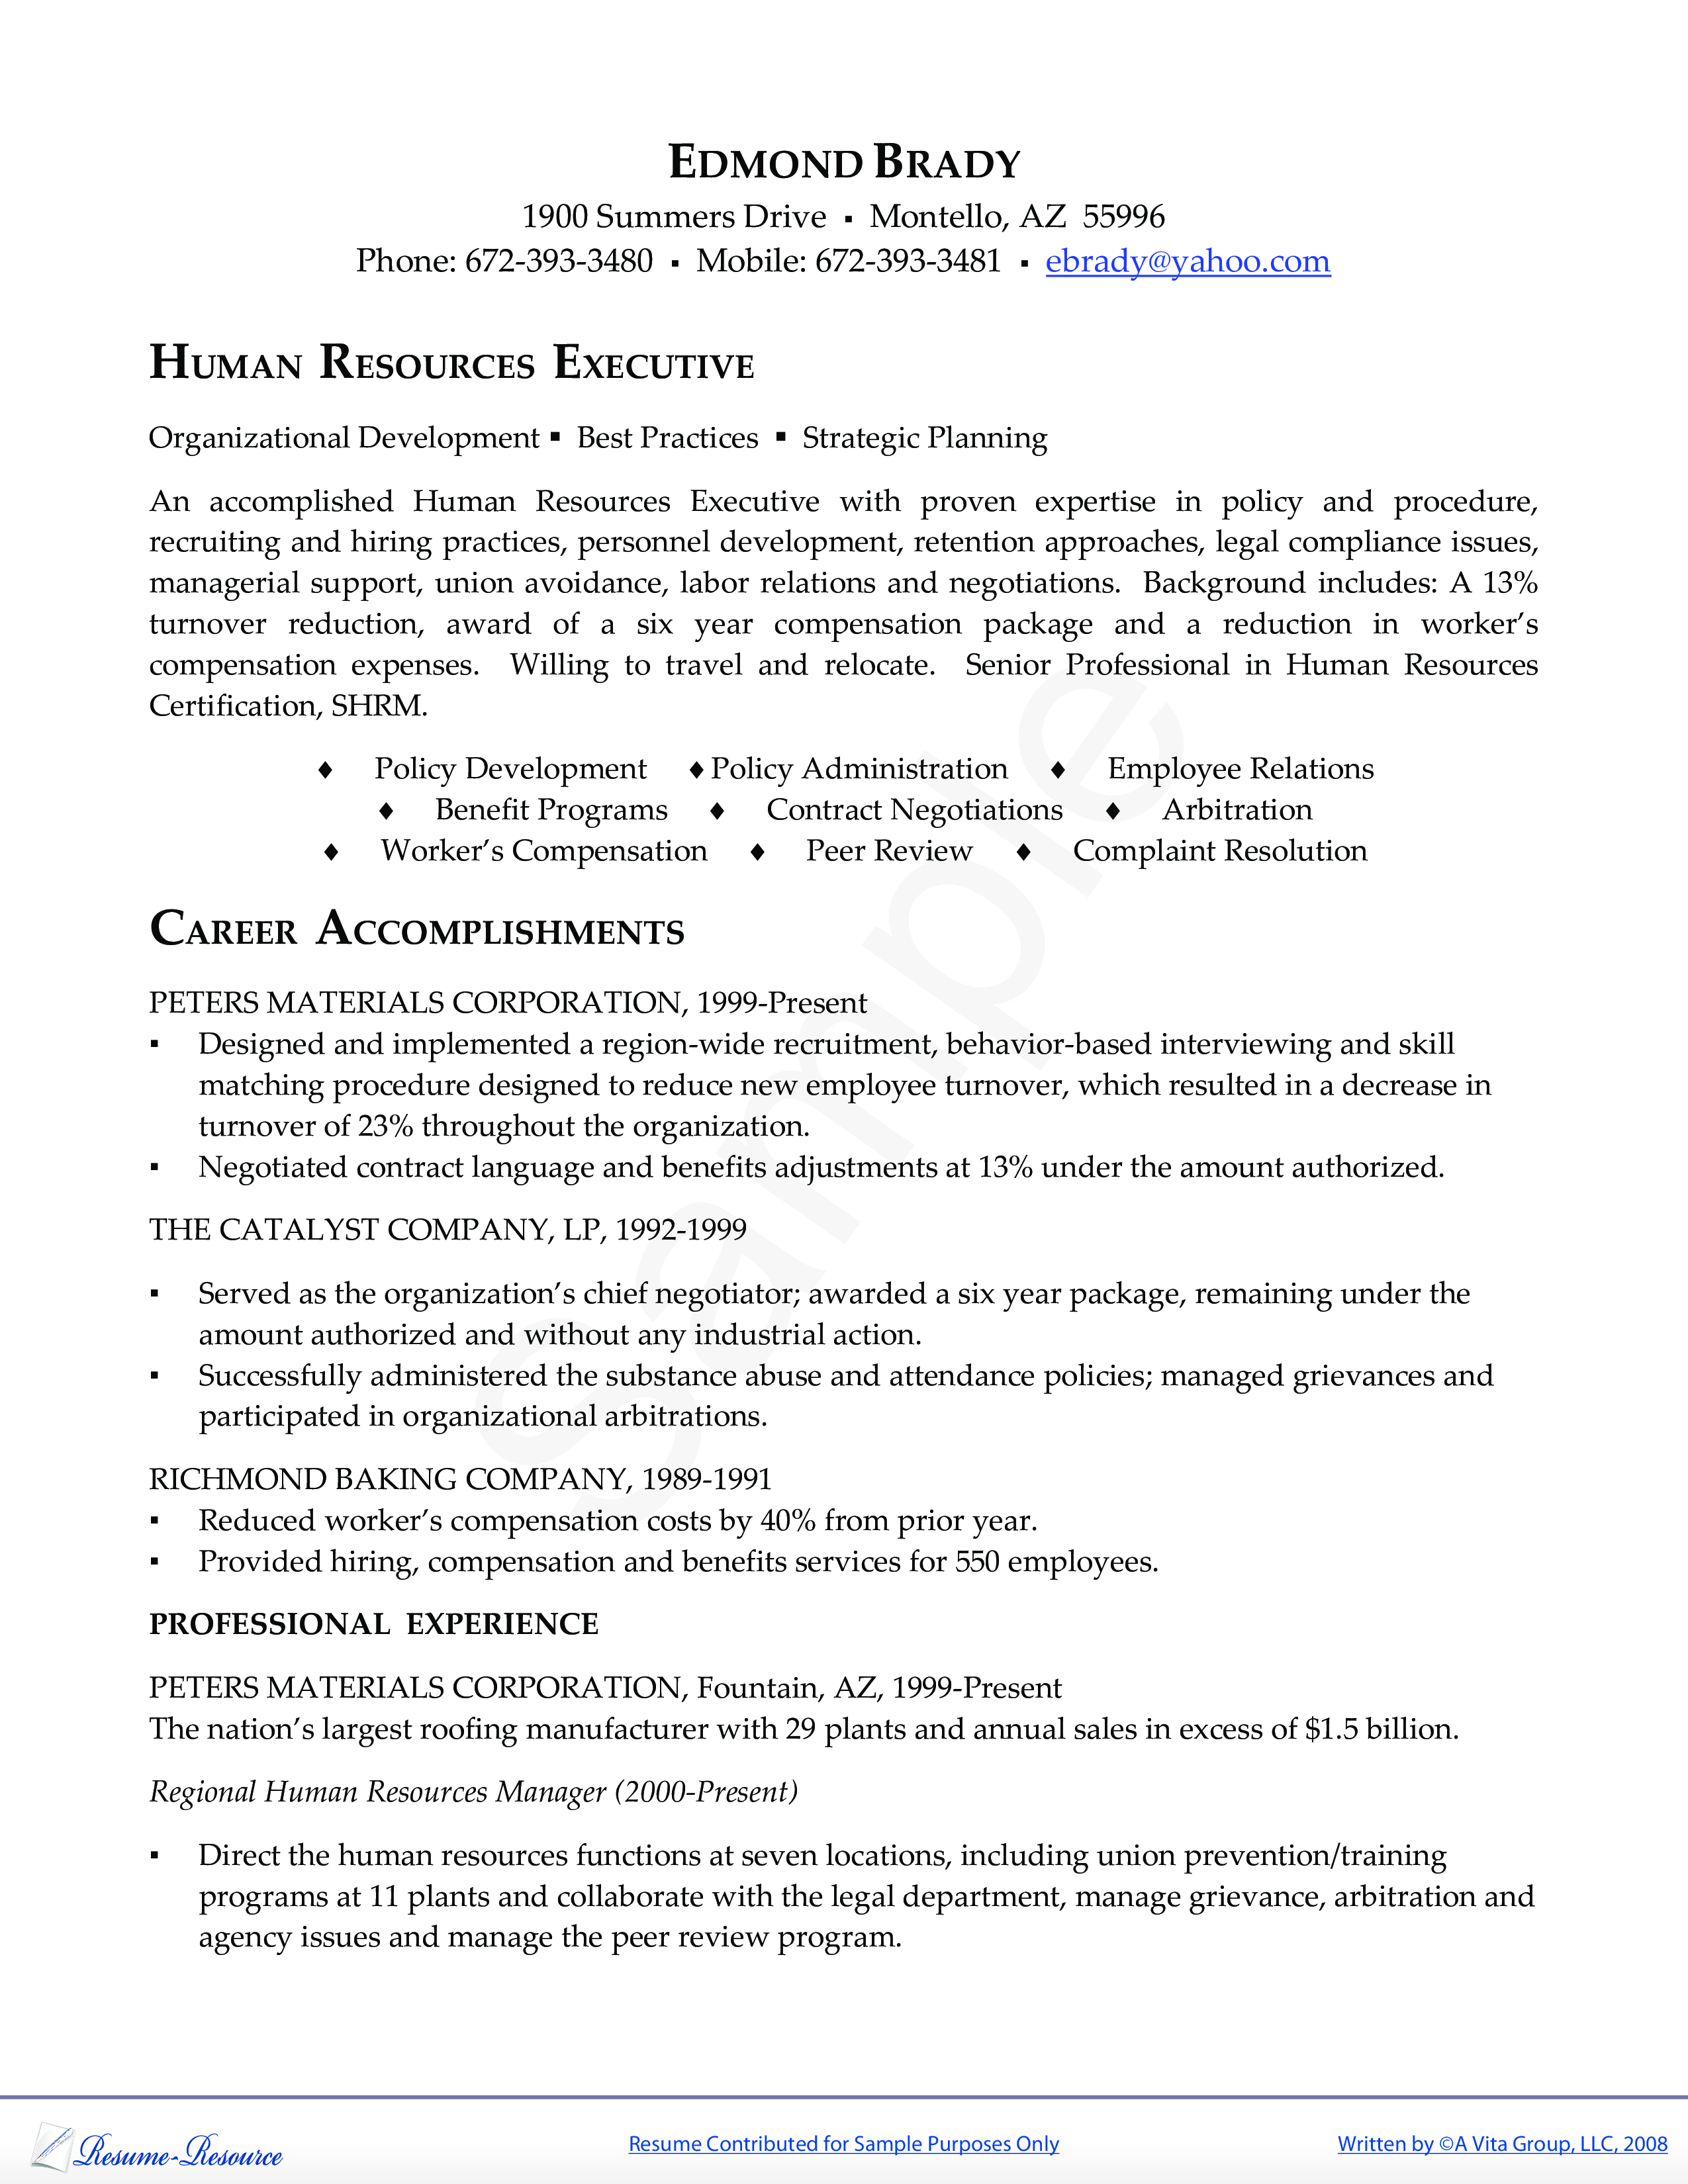 Human Resource Executive Resume main image